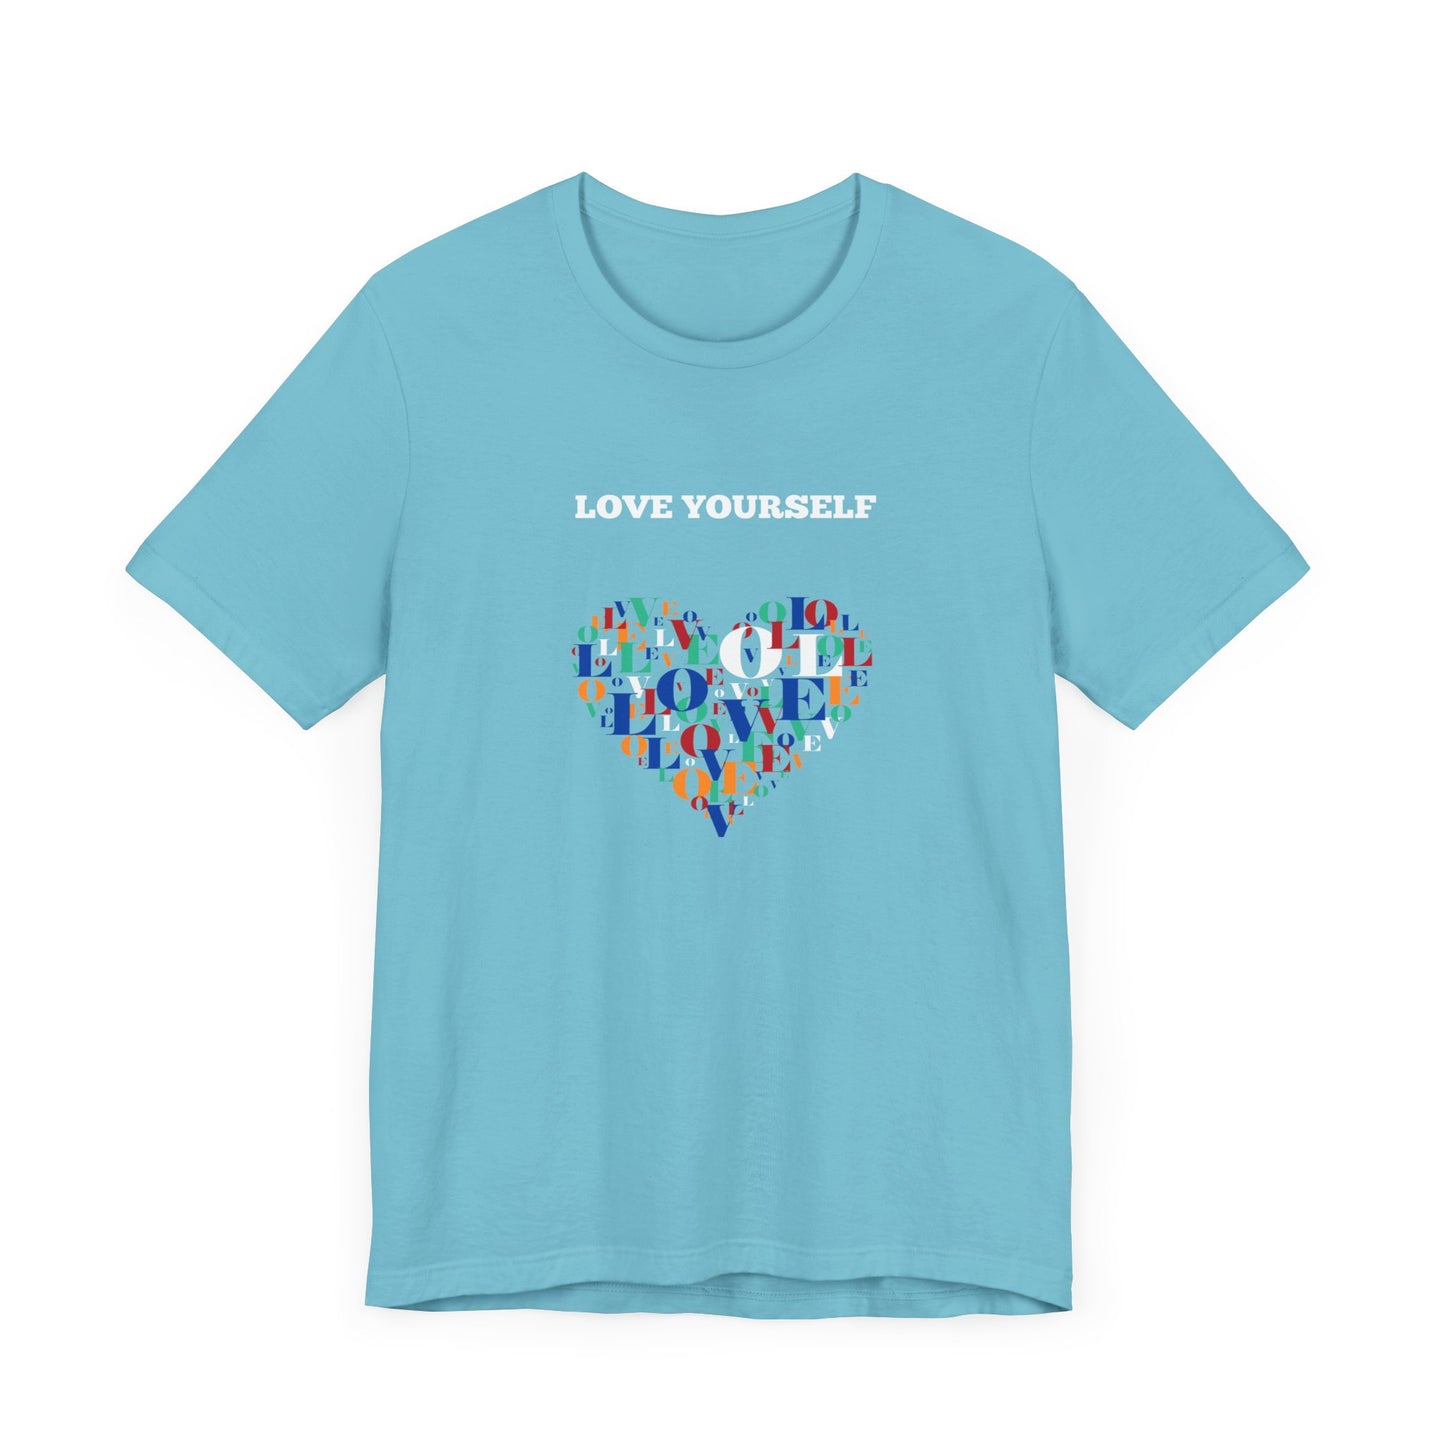 Love Yourself. Unisex Jersey Short Sleeve Tee